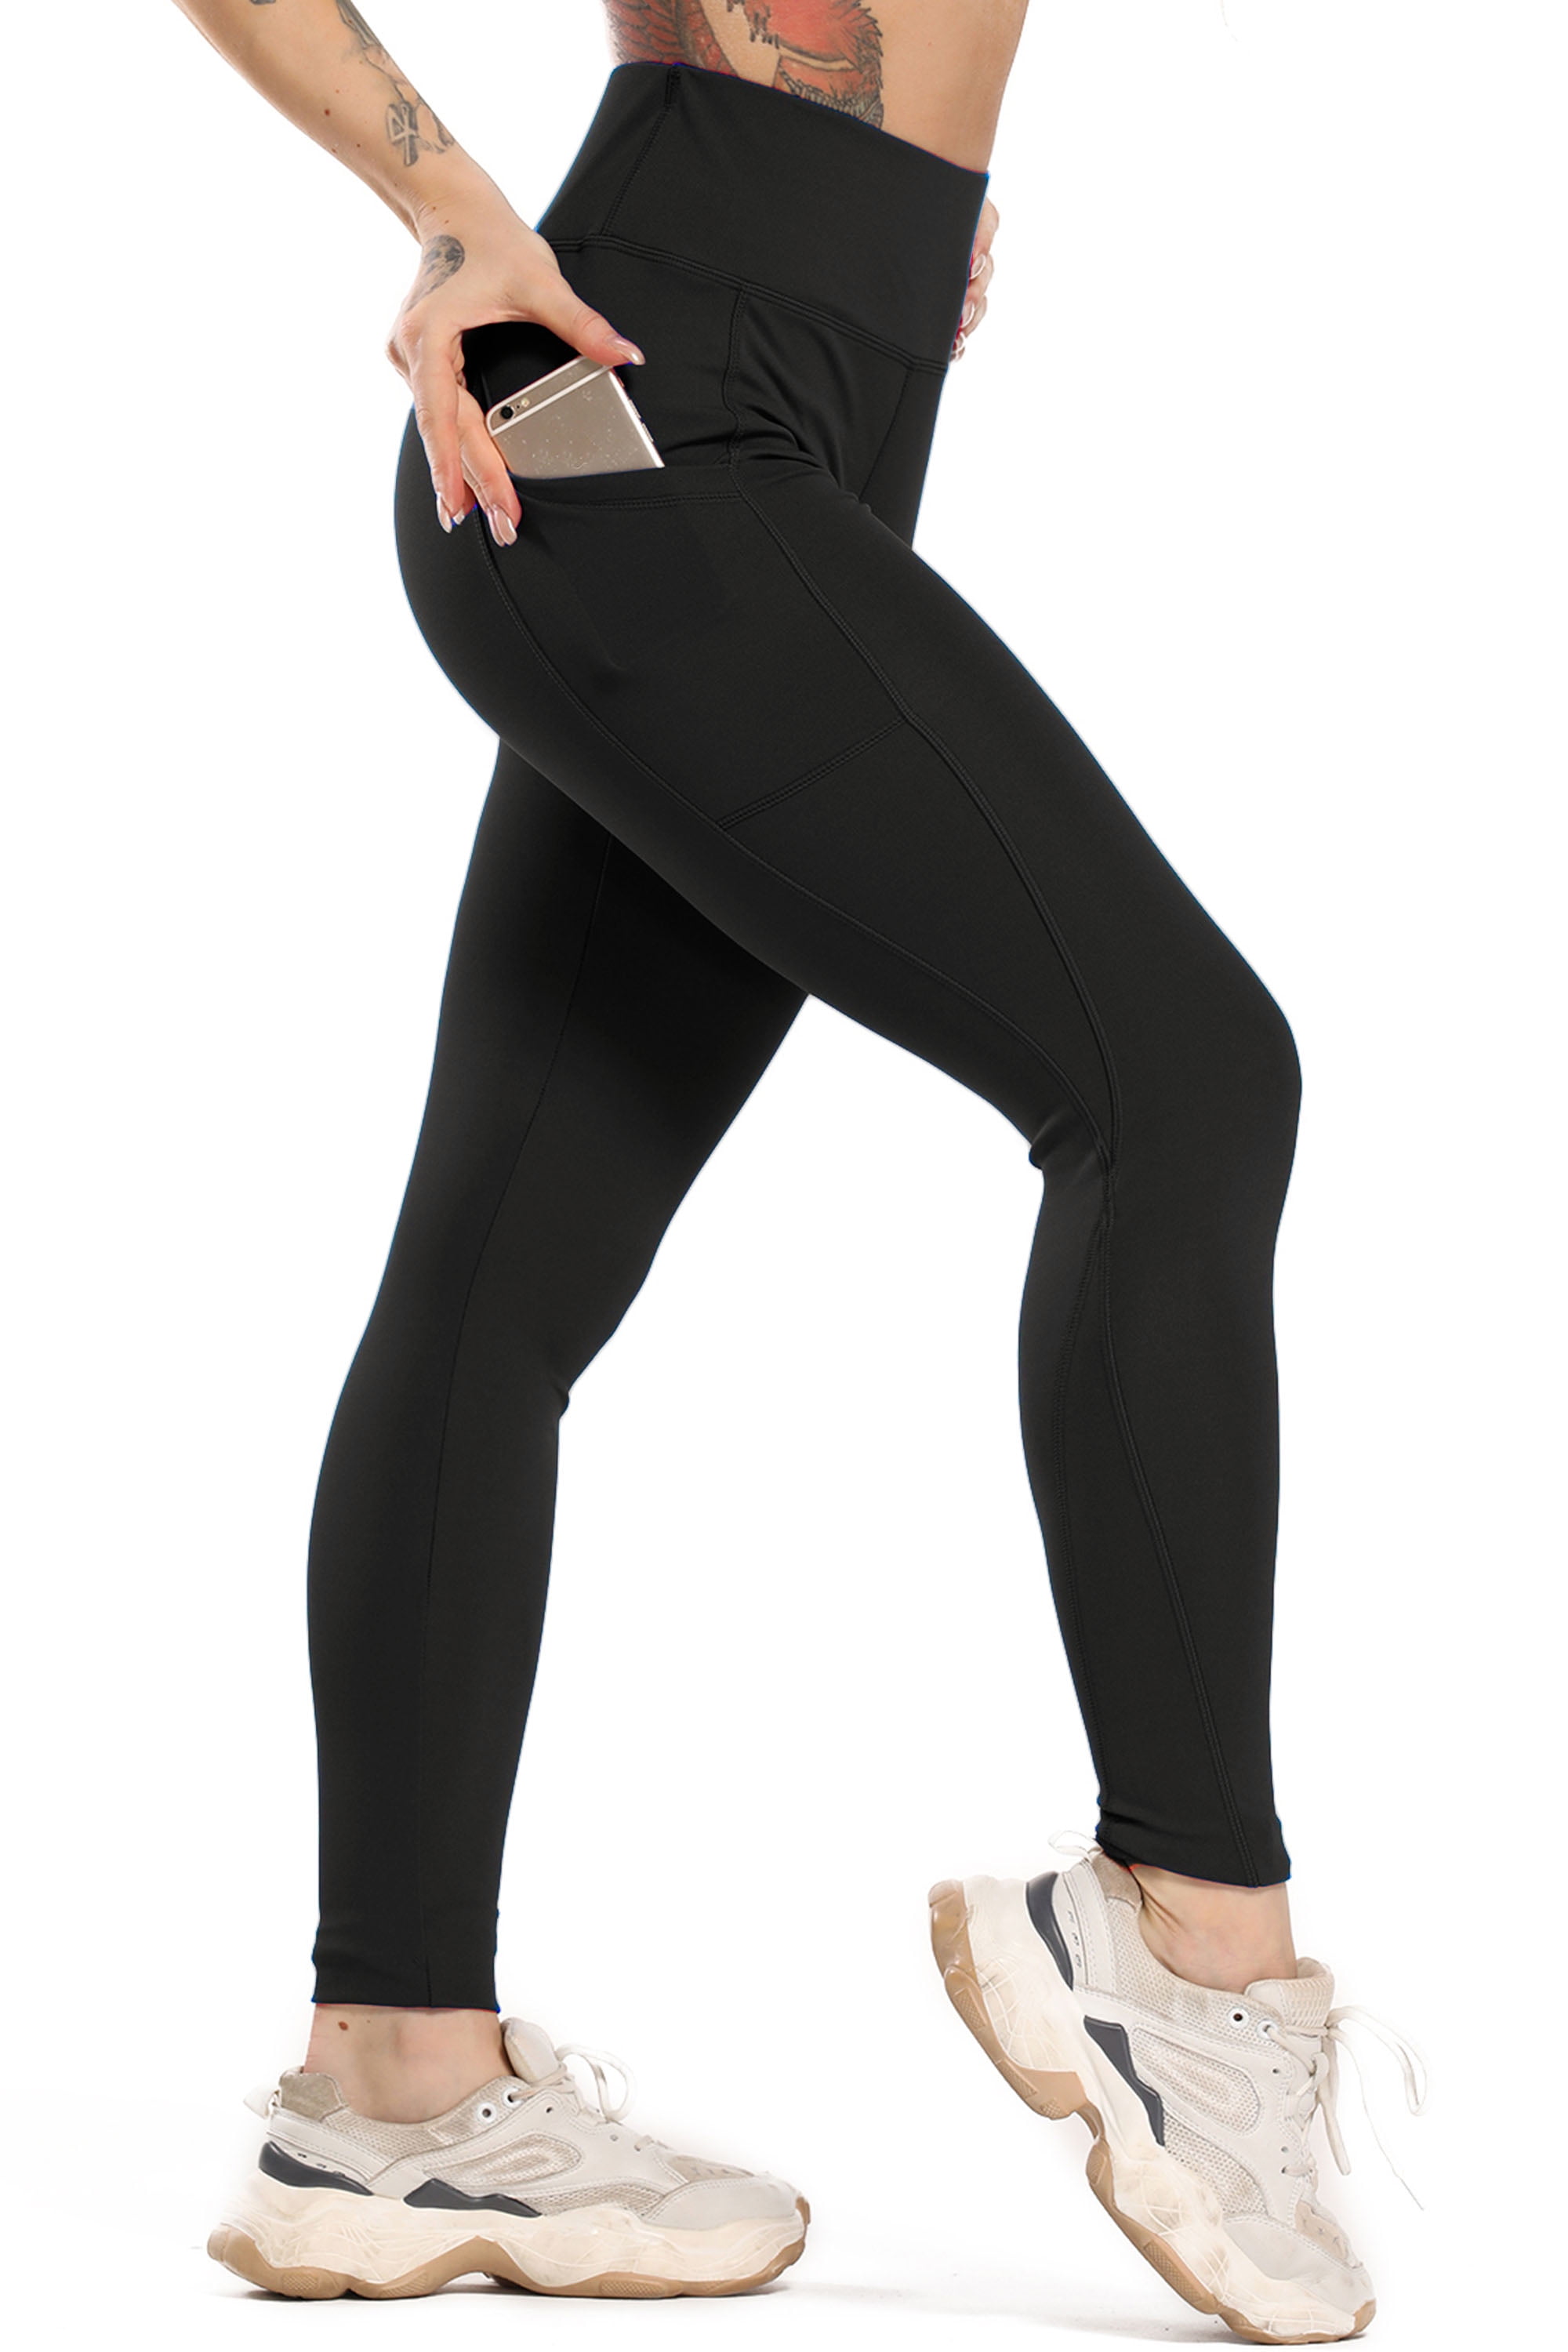 Sugar Pocket Women Yoga Pants Workout Leggings Half Tights with Side Pockets 